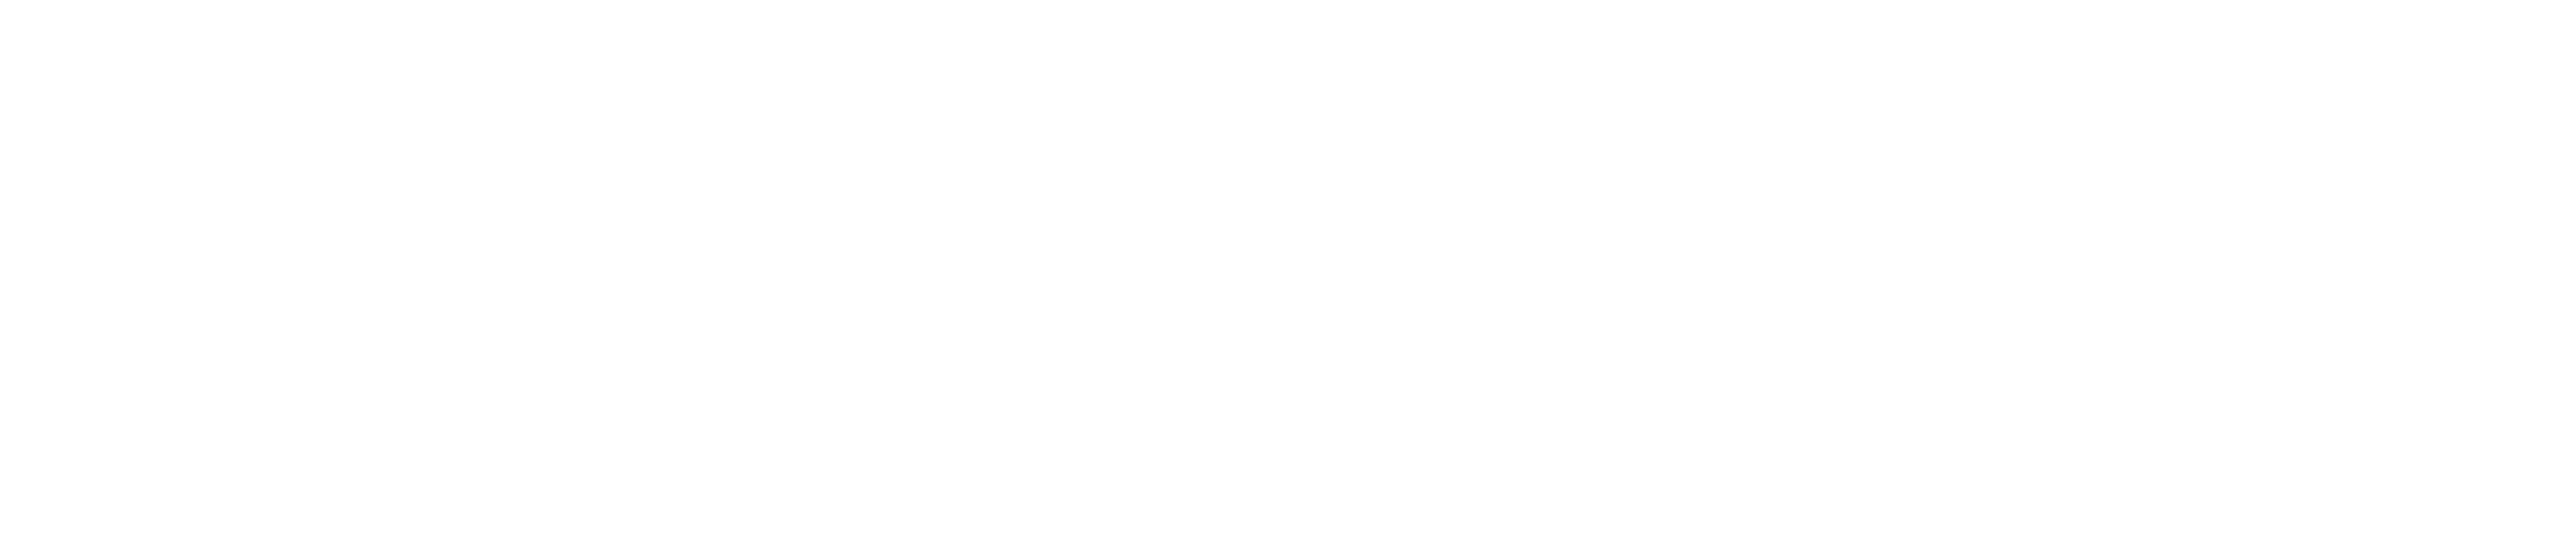 Atticus Home Buyers logo